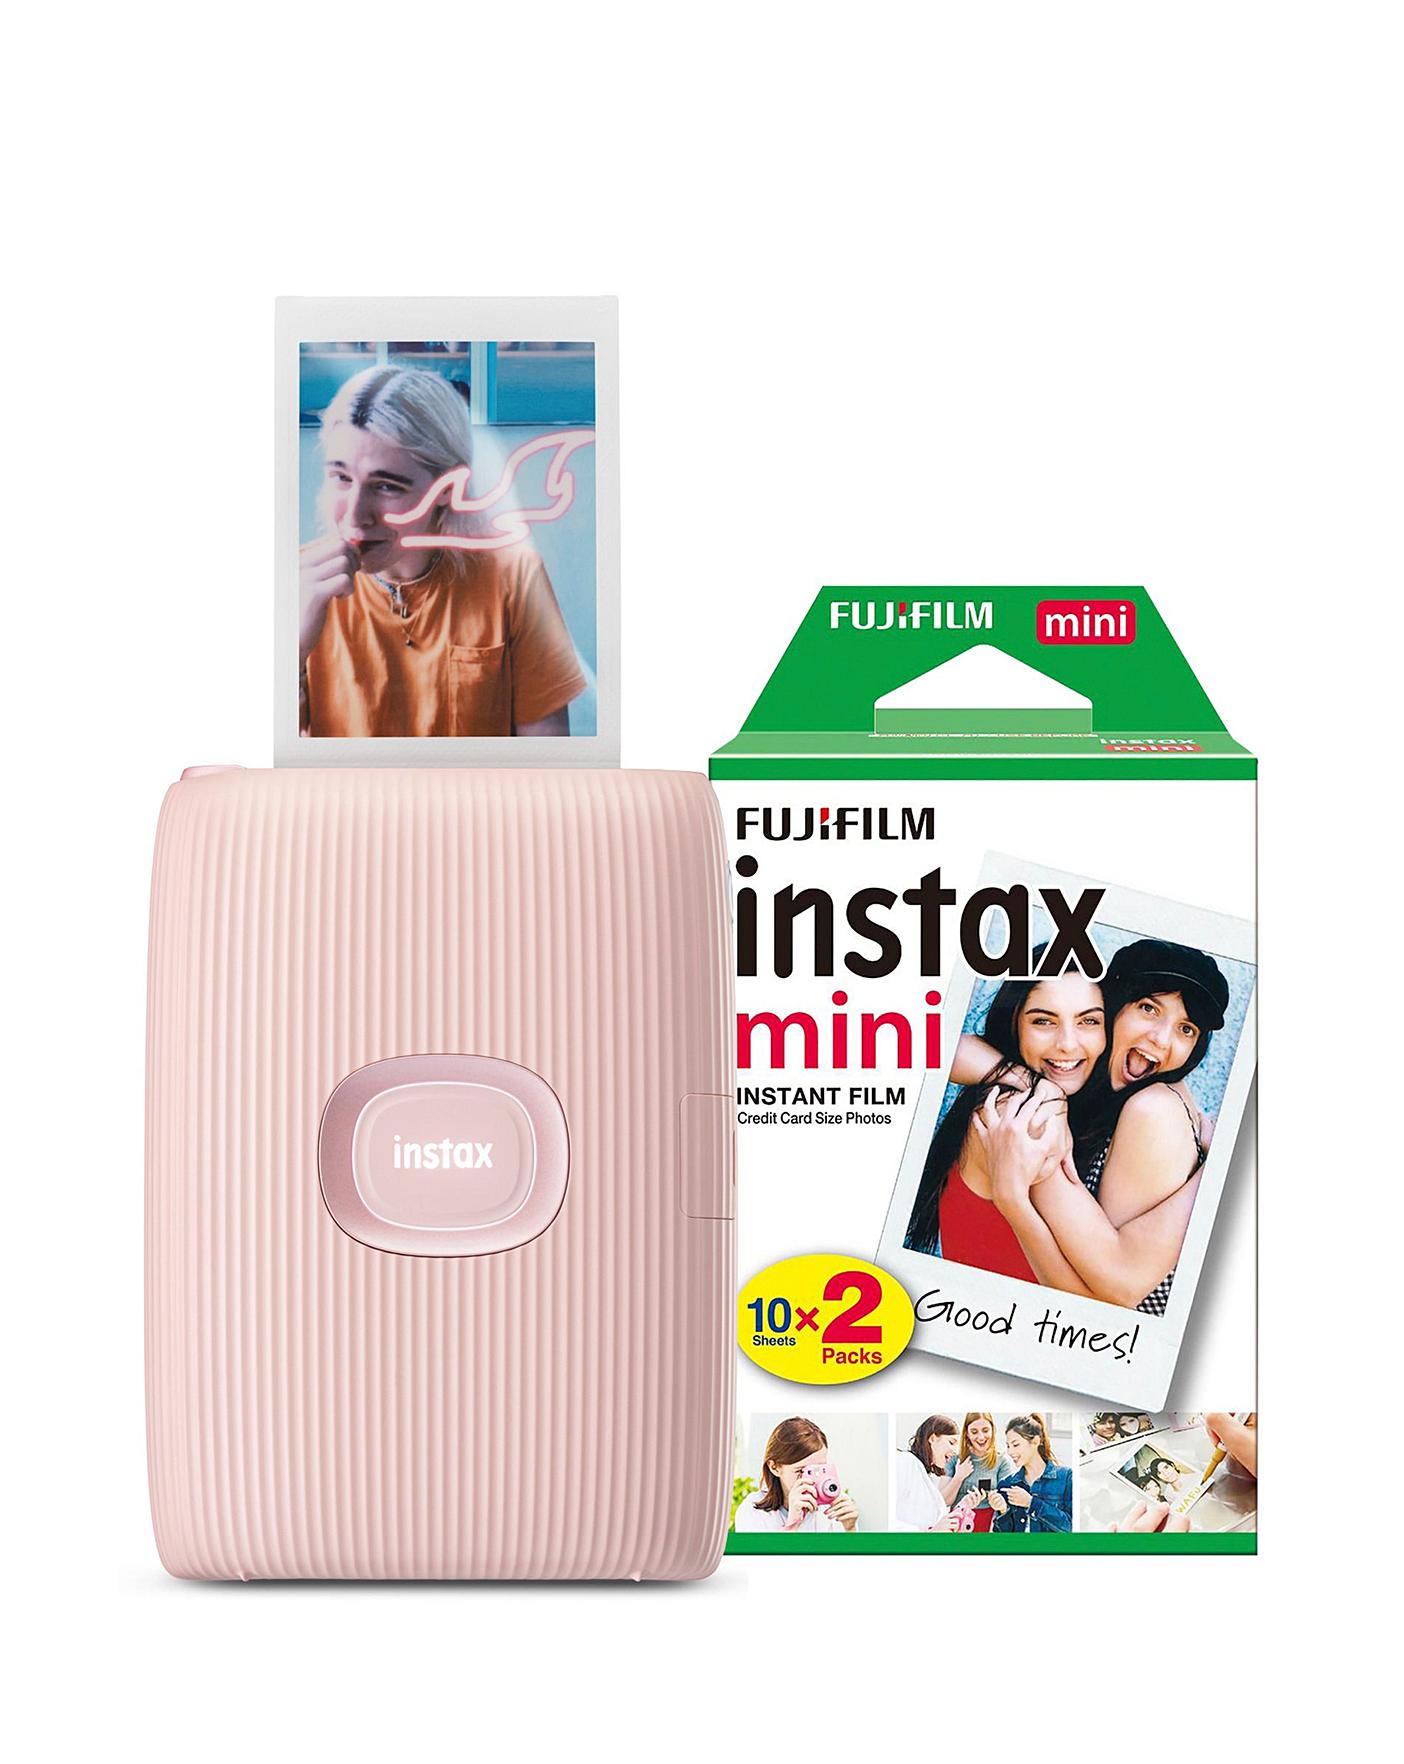 Fujifilm Instax Mini Link 2 review